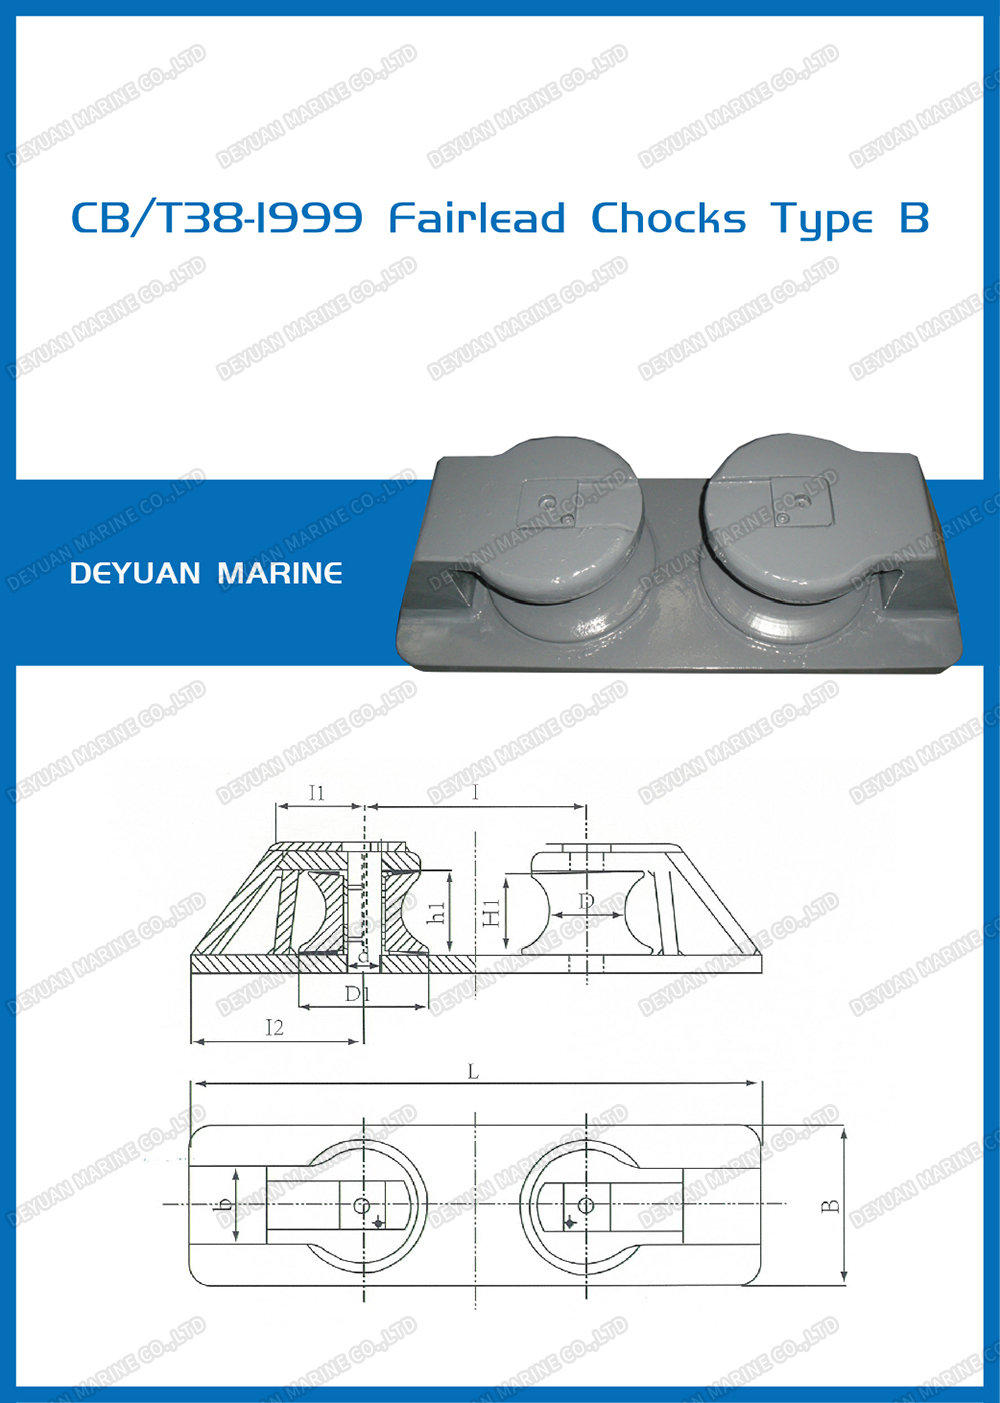 CB/T38-1999 Fairlead Chocks china deyuan marine